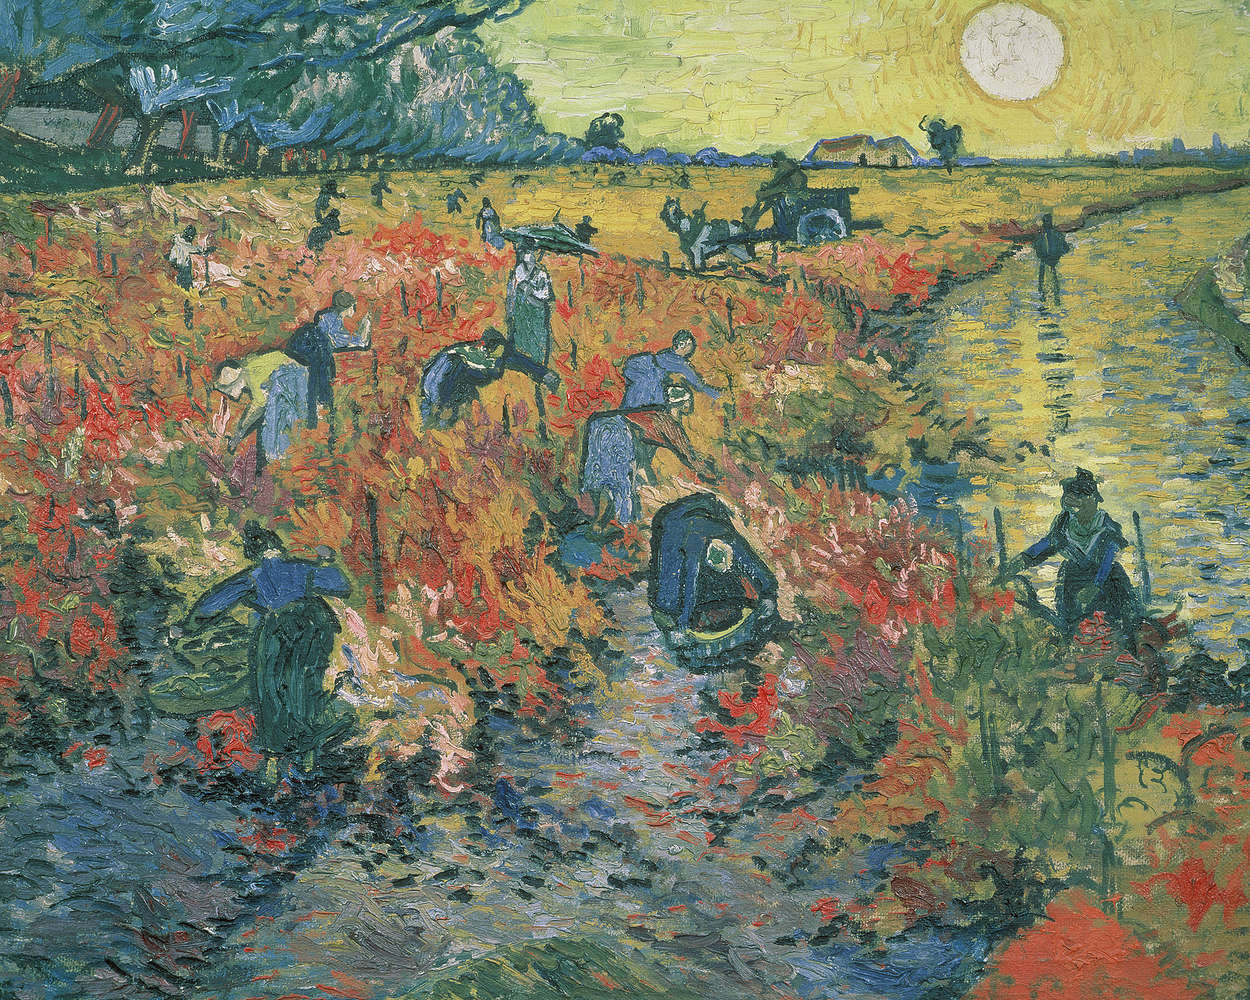             Vigneti rossi" di Vincent van Gogh
        